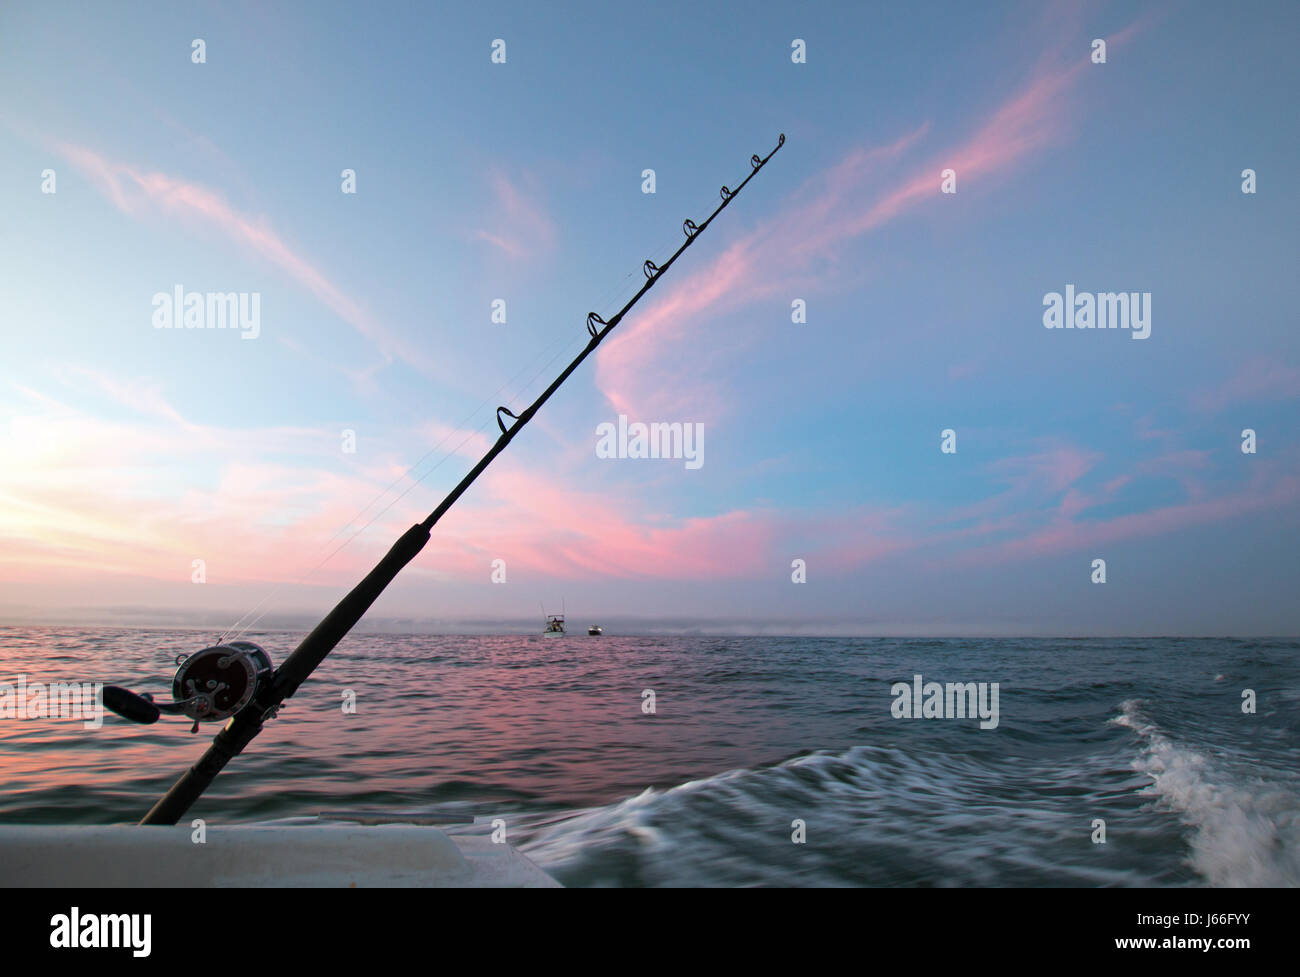 https://c8.alamy.com/comp/J66FYY/fishing-road-on-charter-fishing-boat-against-pink-sunrise-sky-on-the-J66FYY.jpg